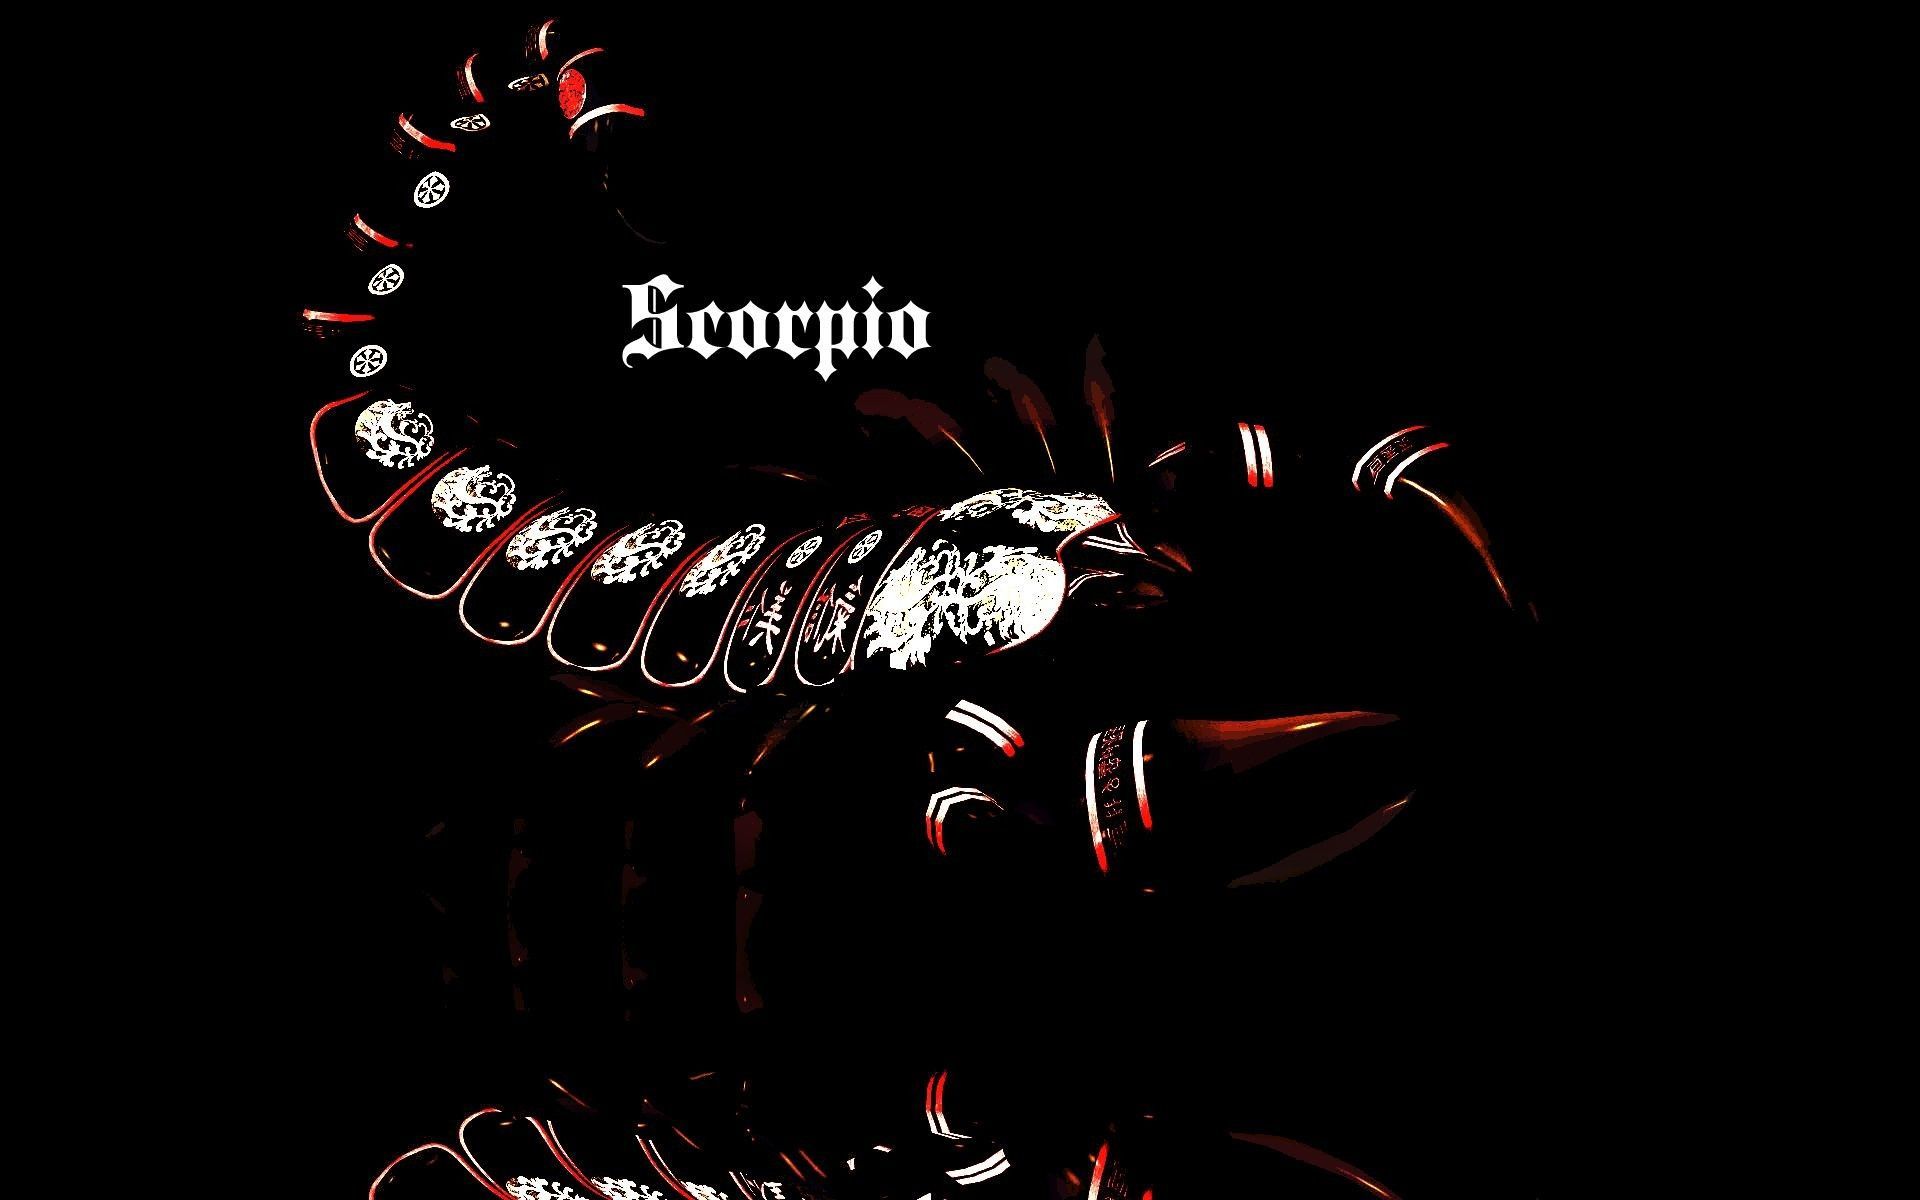 Scorpio Wallpaper Free Scorpio Background